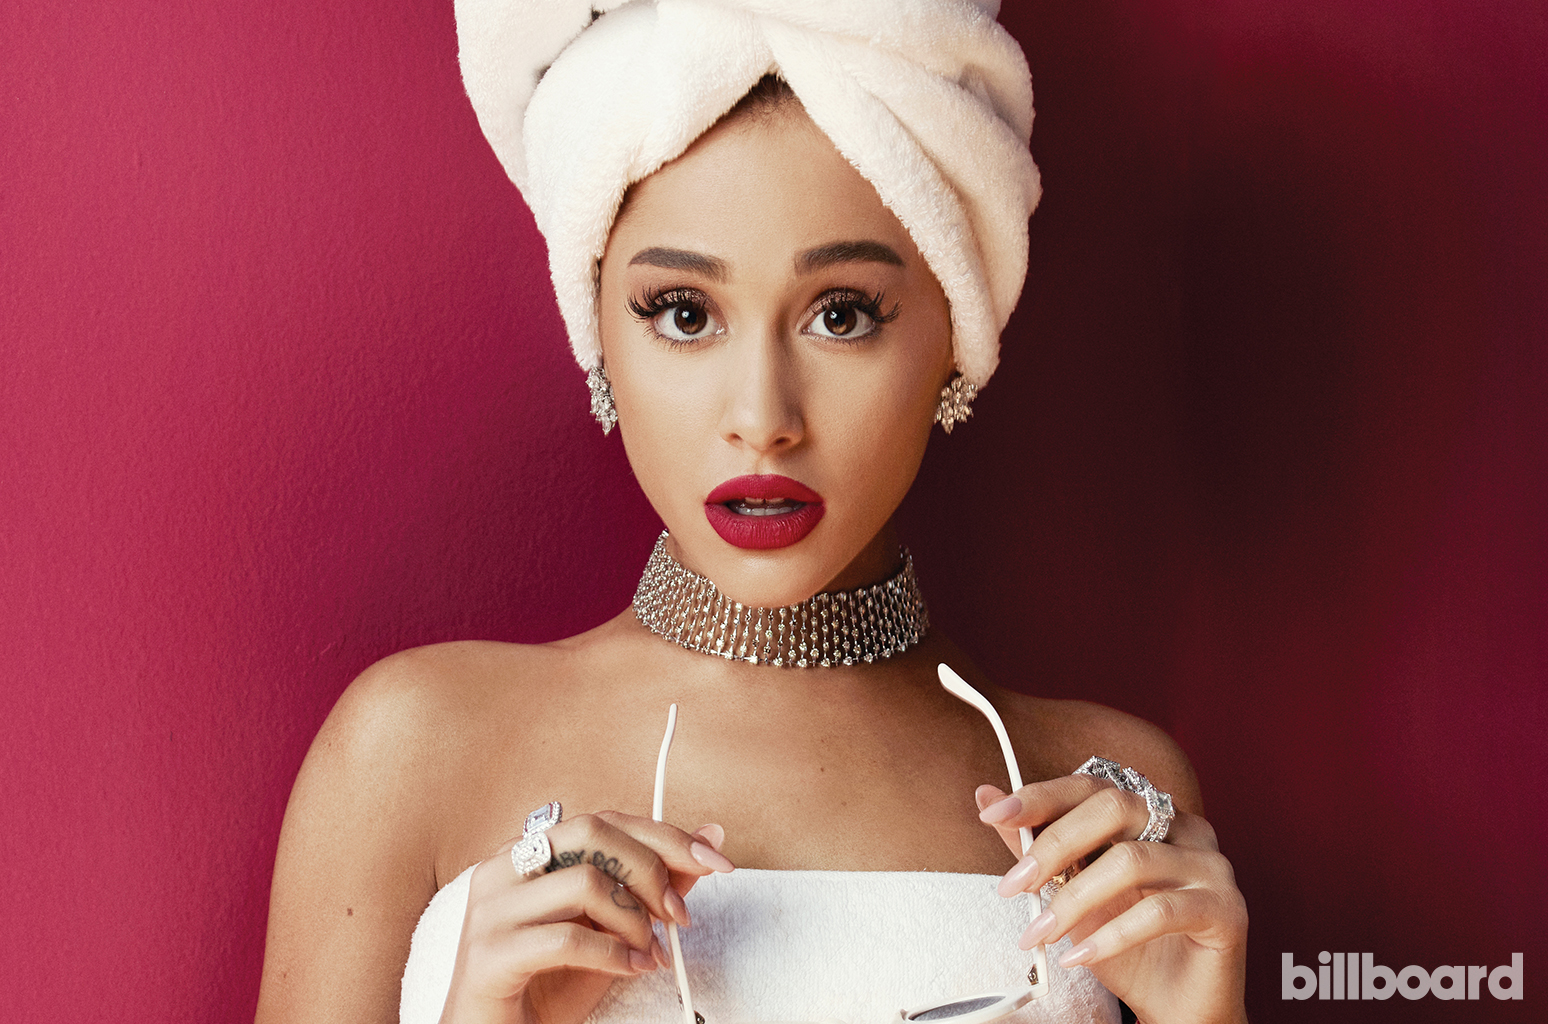 Best Ariana Grande Wallpaper - All Ariana Grande Magazine Covers - HD Wallpaper 